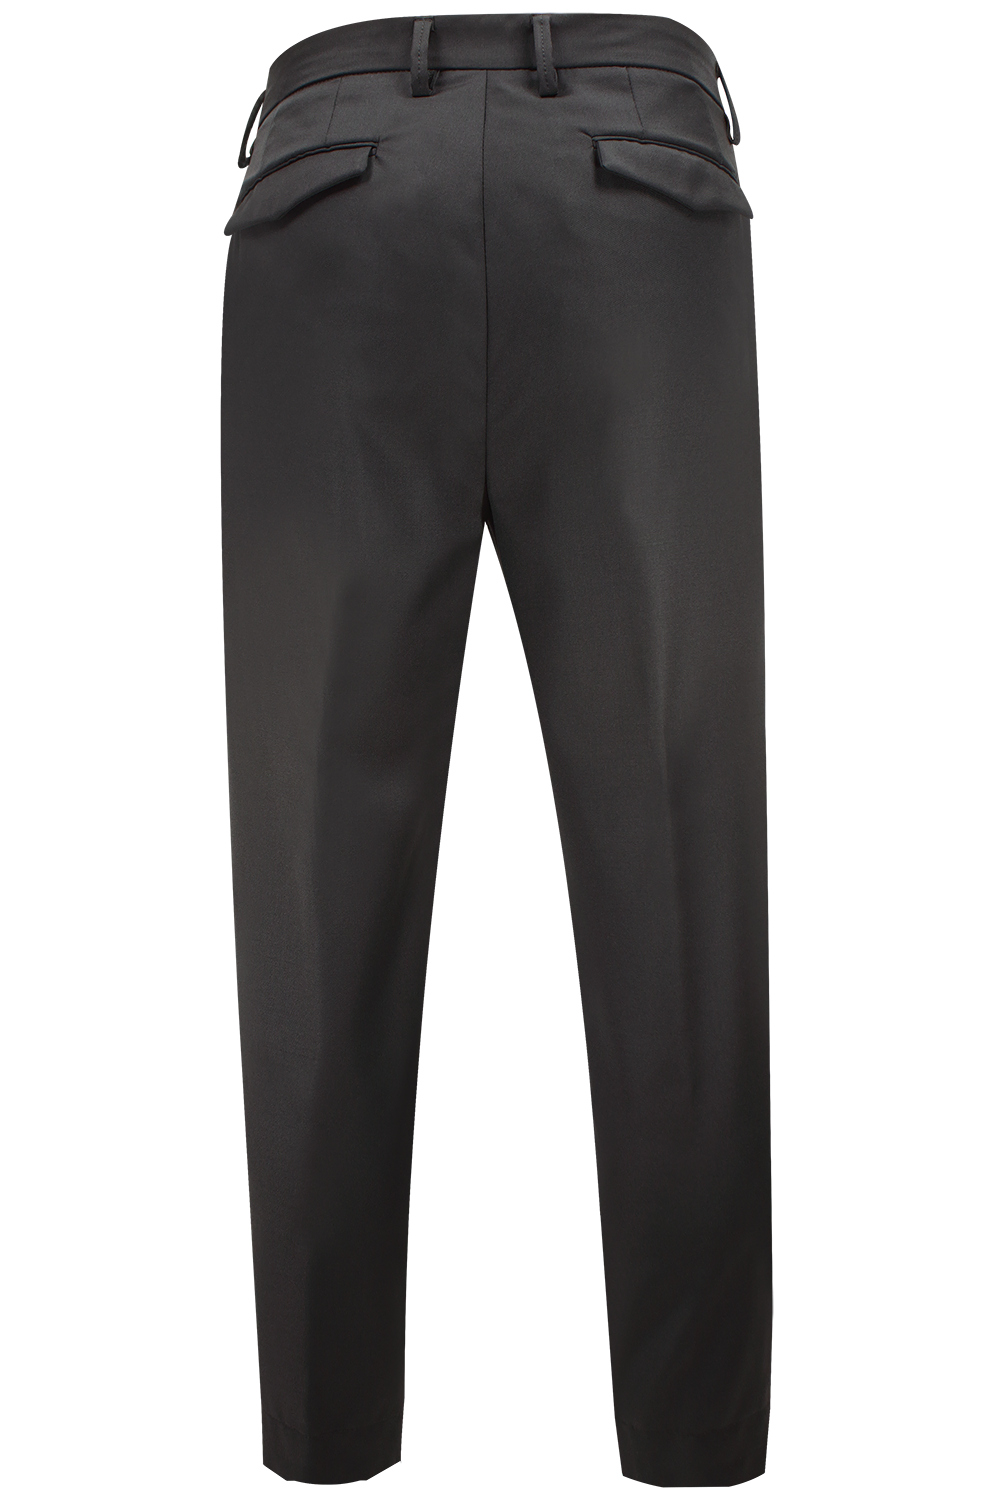 Pantalone con pince incrociata in lana nera retro